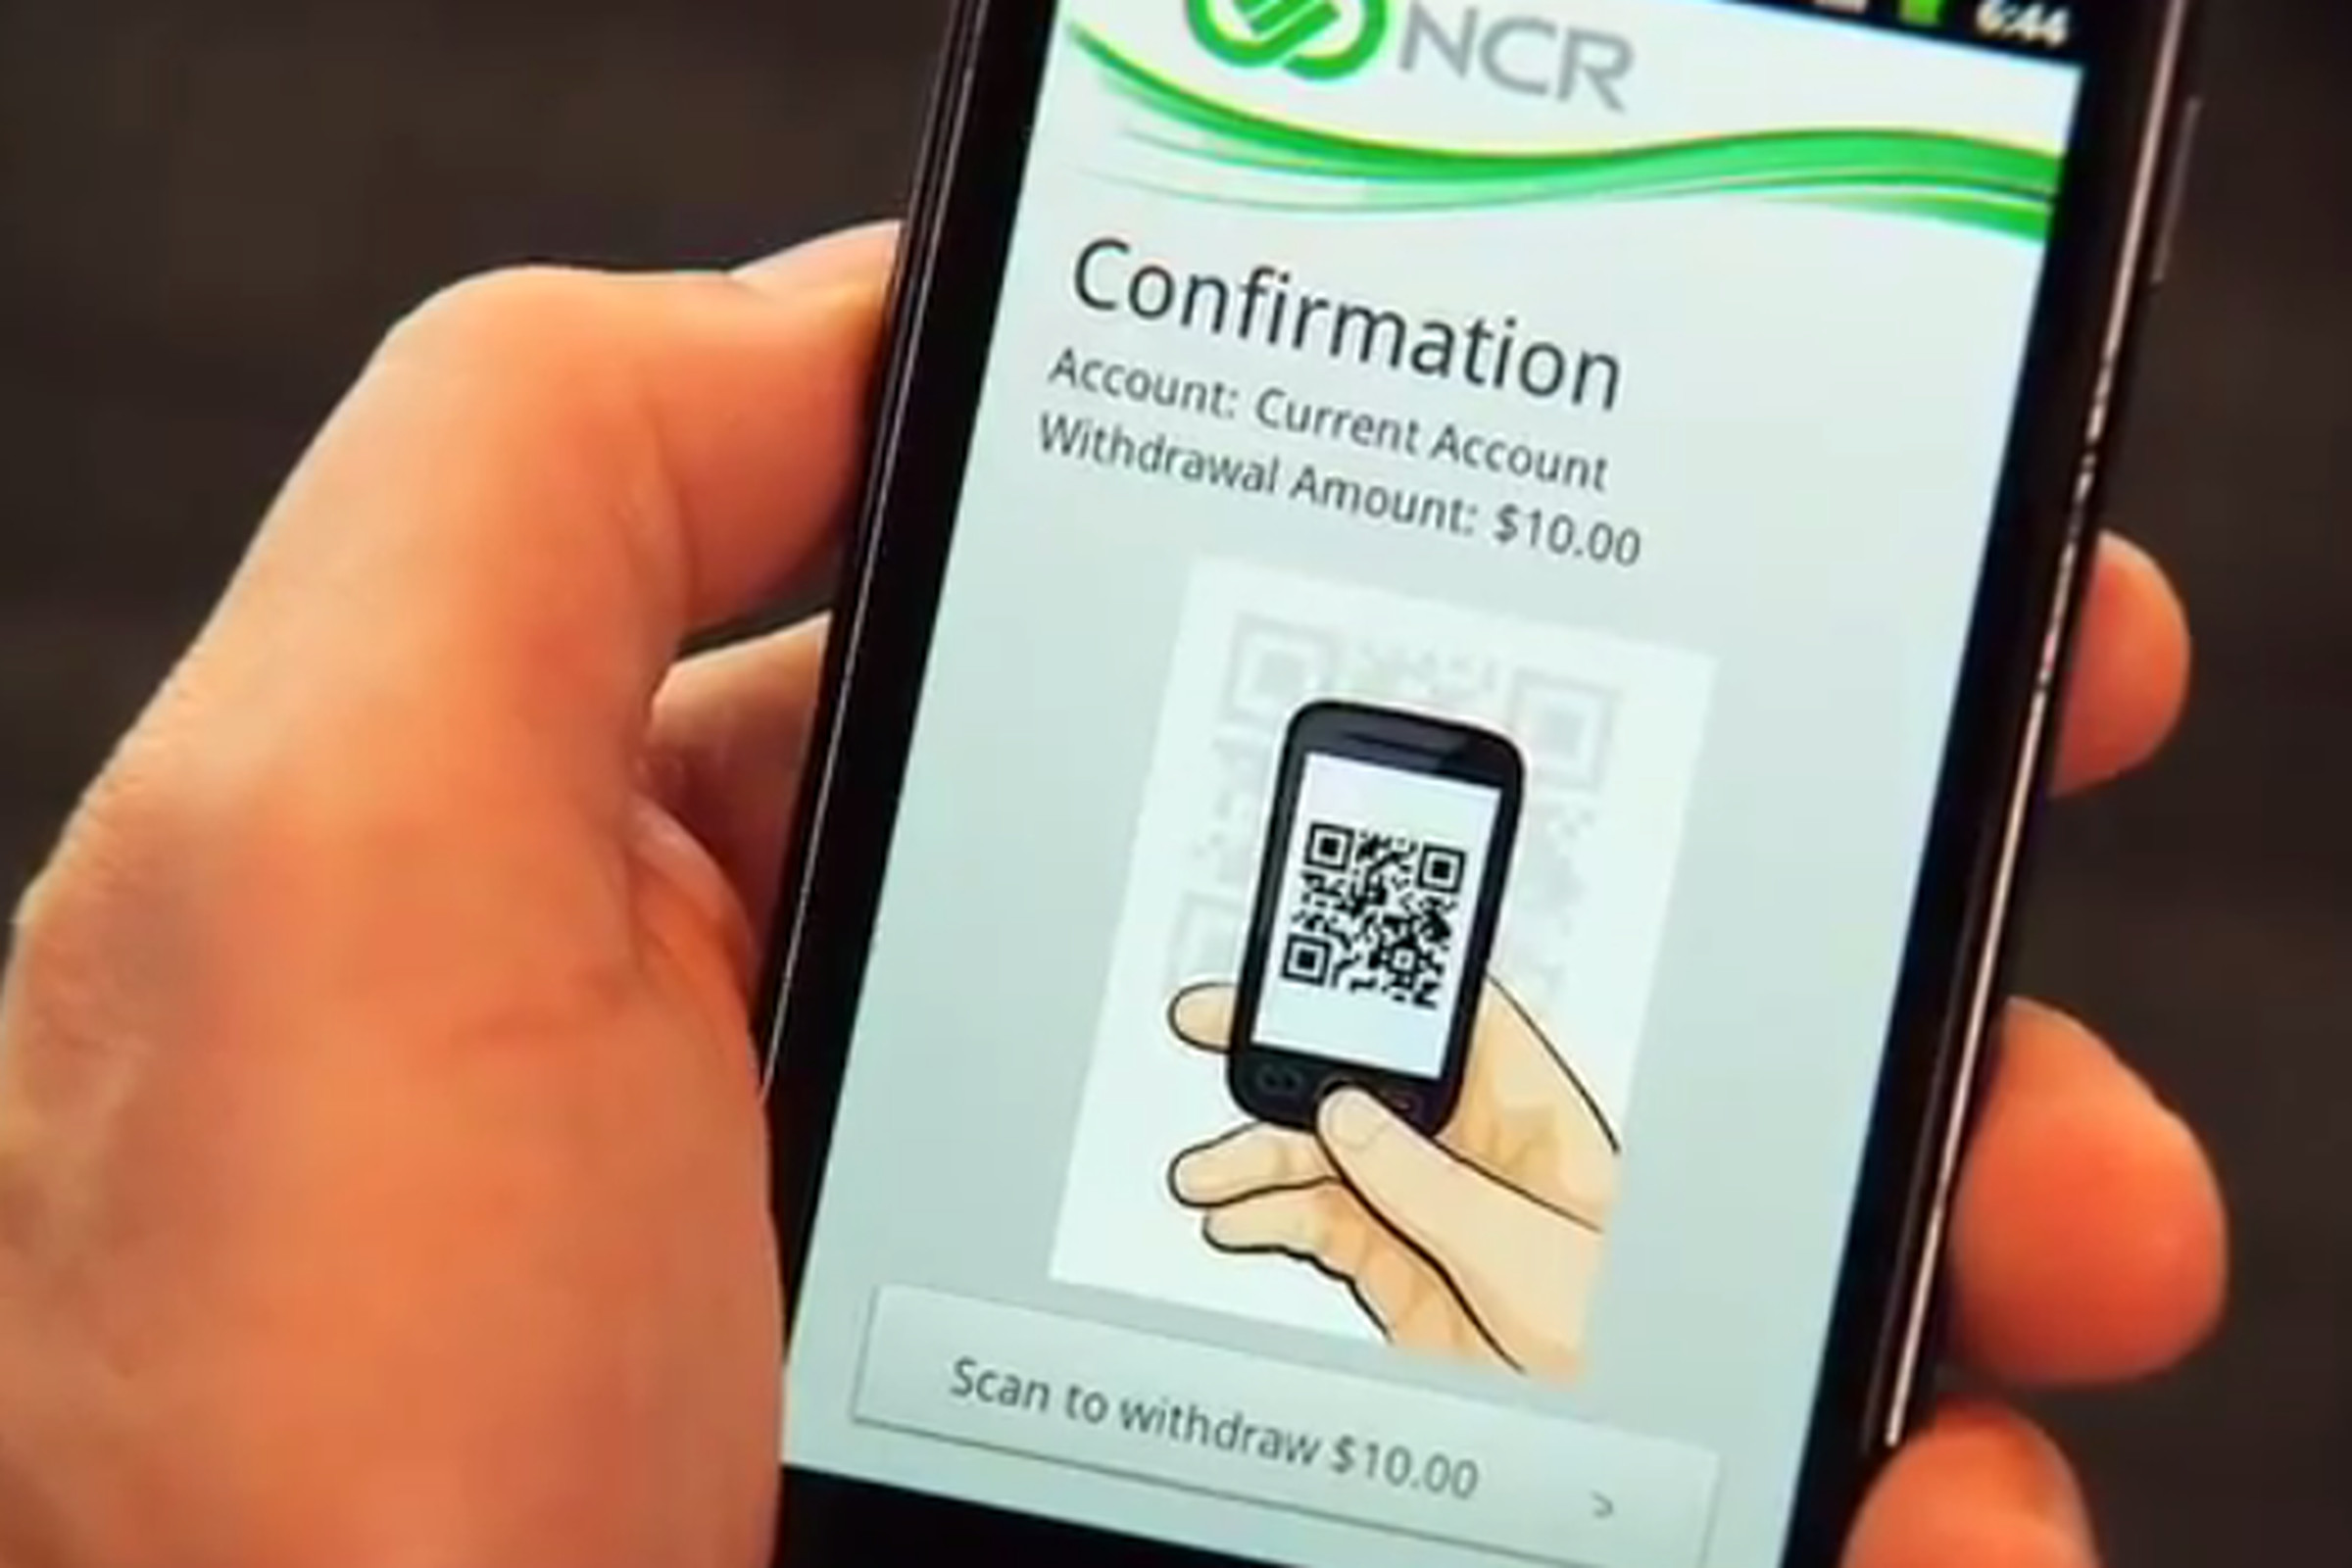 NCR ATM app